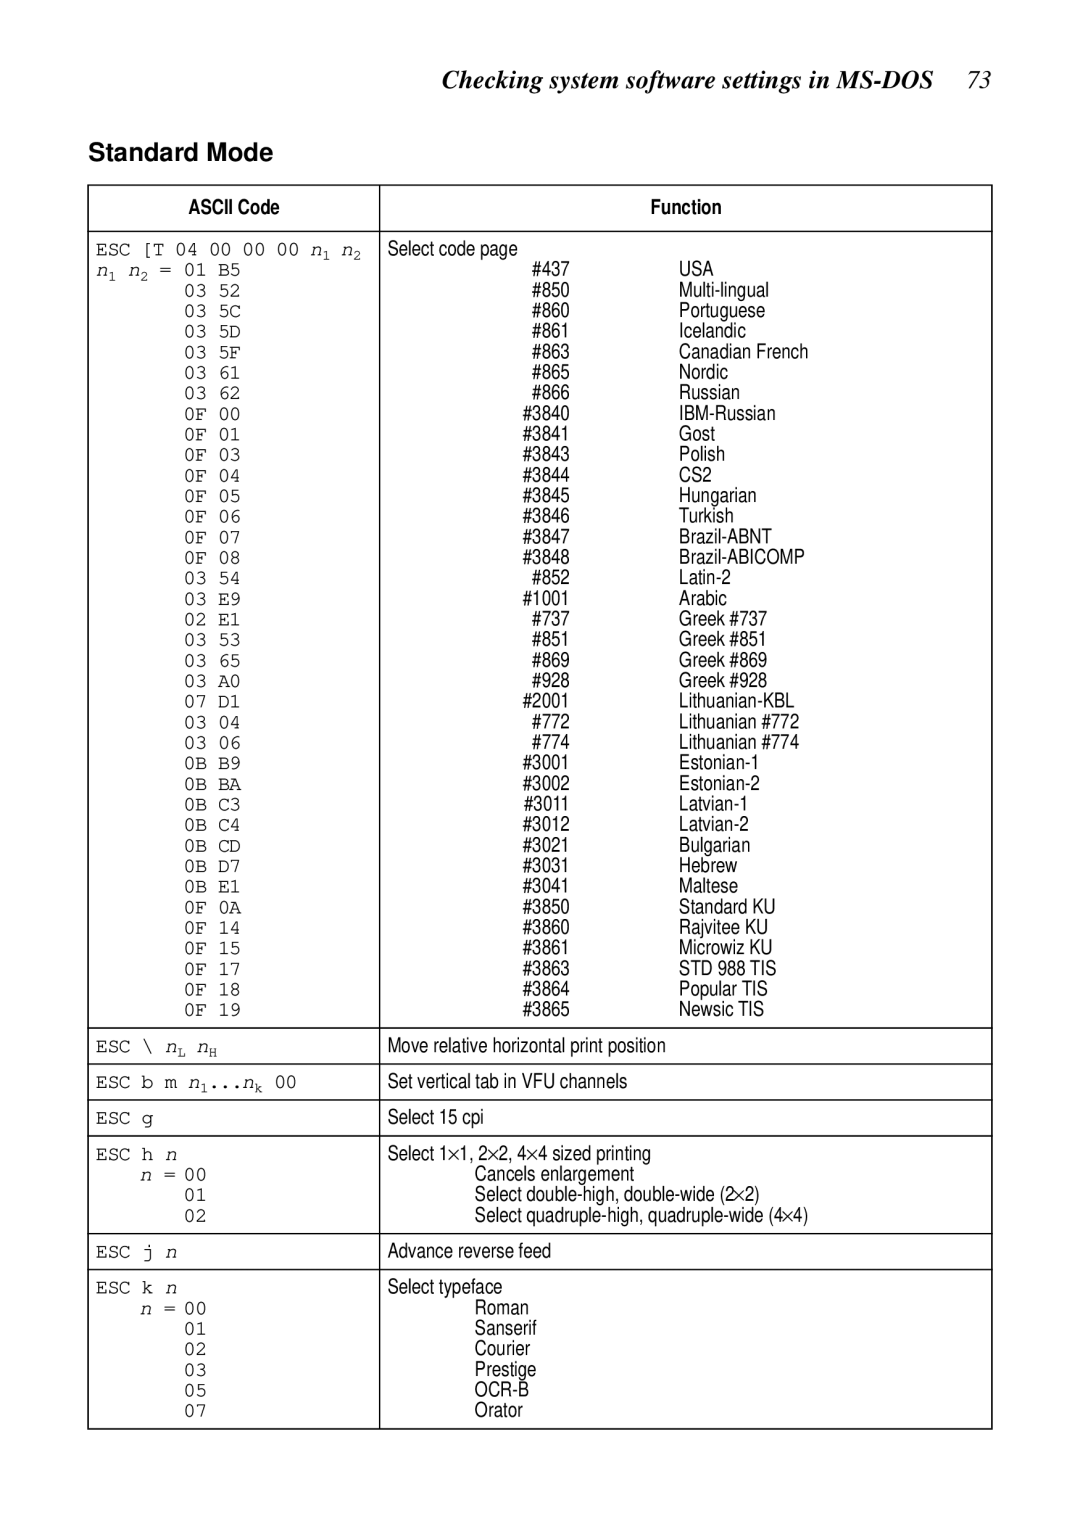 Star Micronics XB24-250 II Checking system software settings in MS-DOS, Standard Mode, ESC T 04 00 00 00 n1 n2, ESC h n 